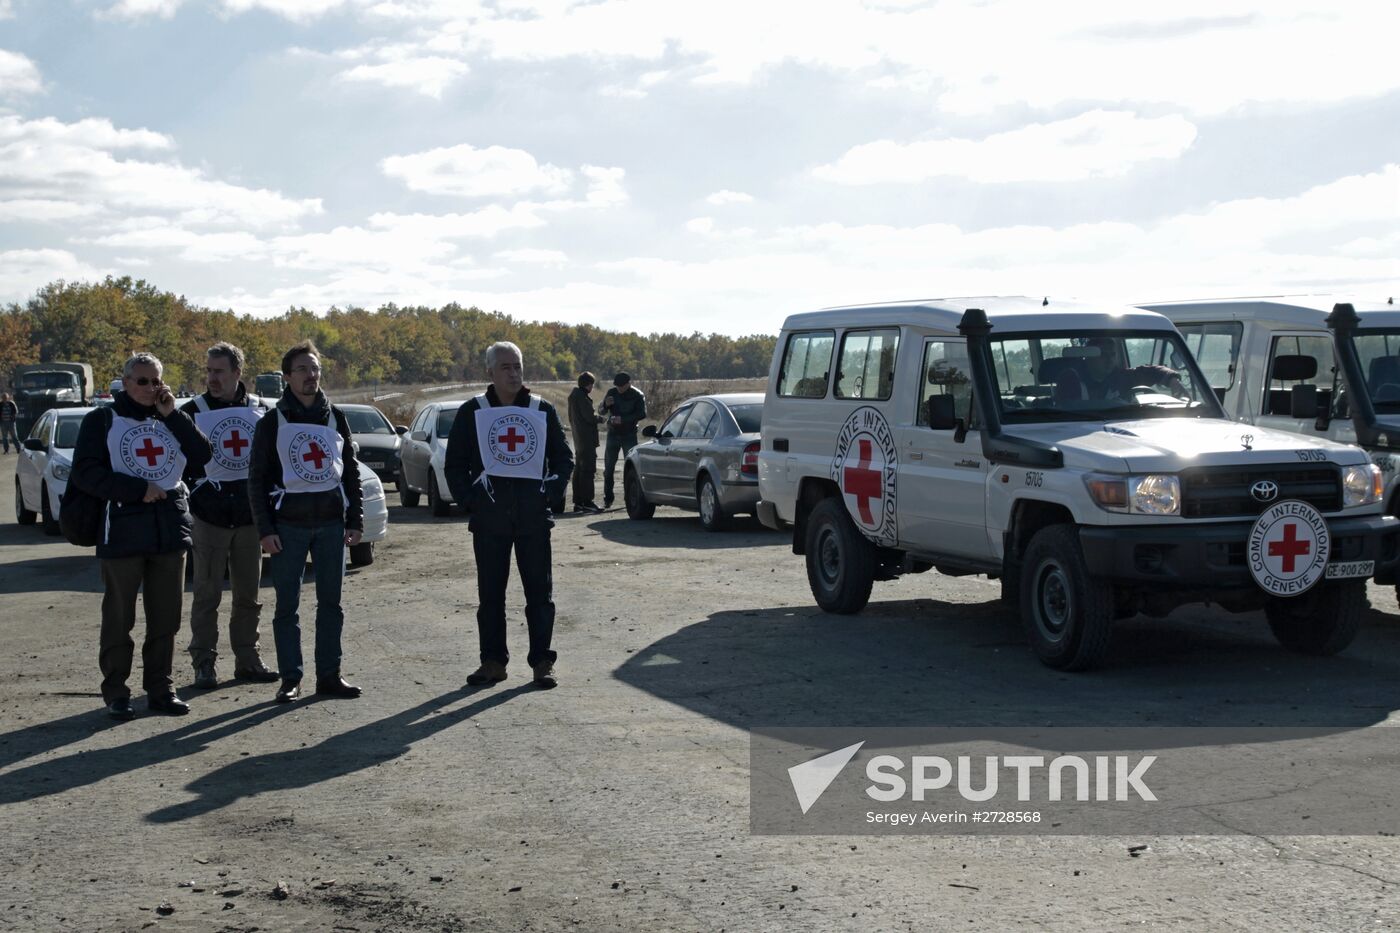 POW exchange in Luhansk People's Republic